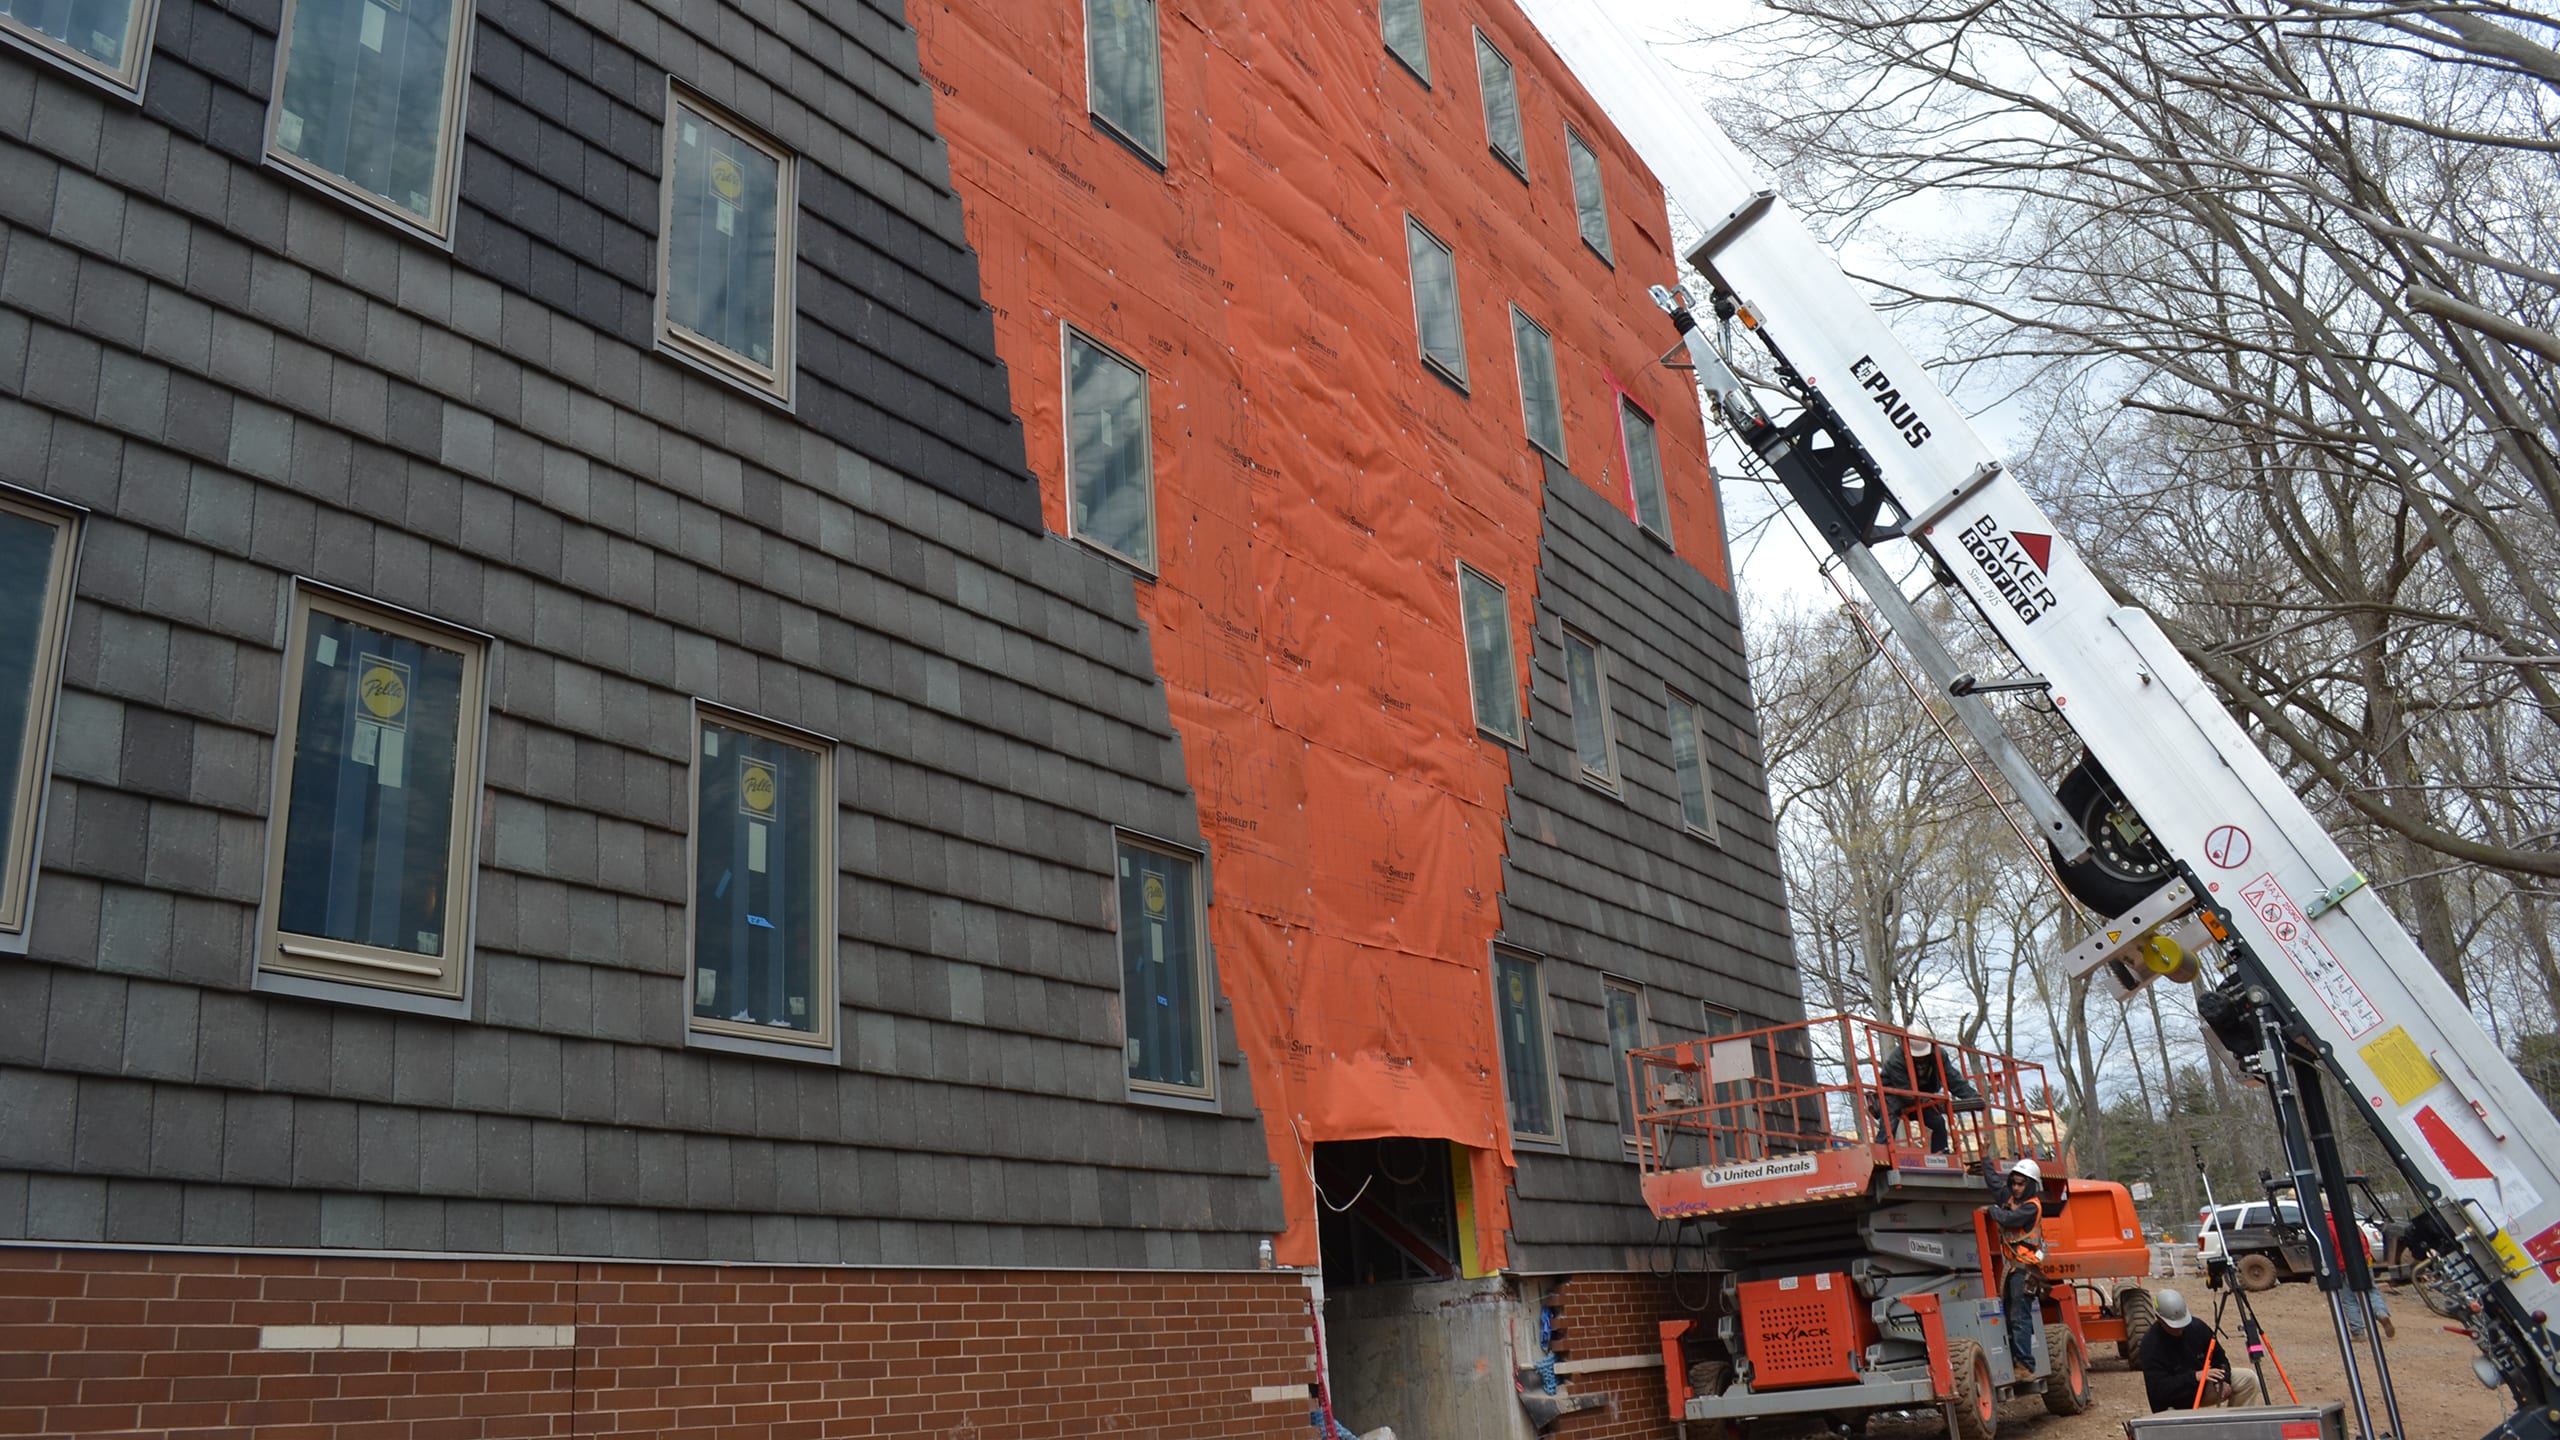 Princeton University Featuring LudoSlate Terra Cotta Interlocking Roof Tile and NeXclad Terra Cotta Cladding